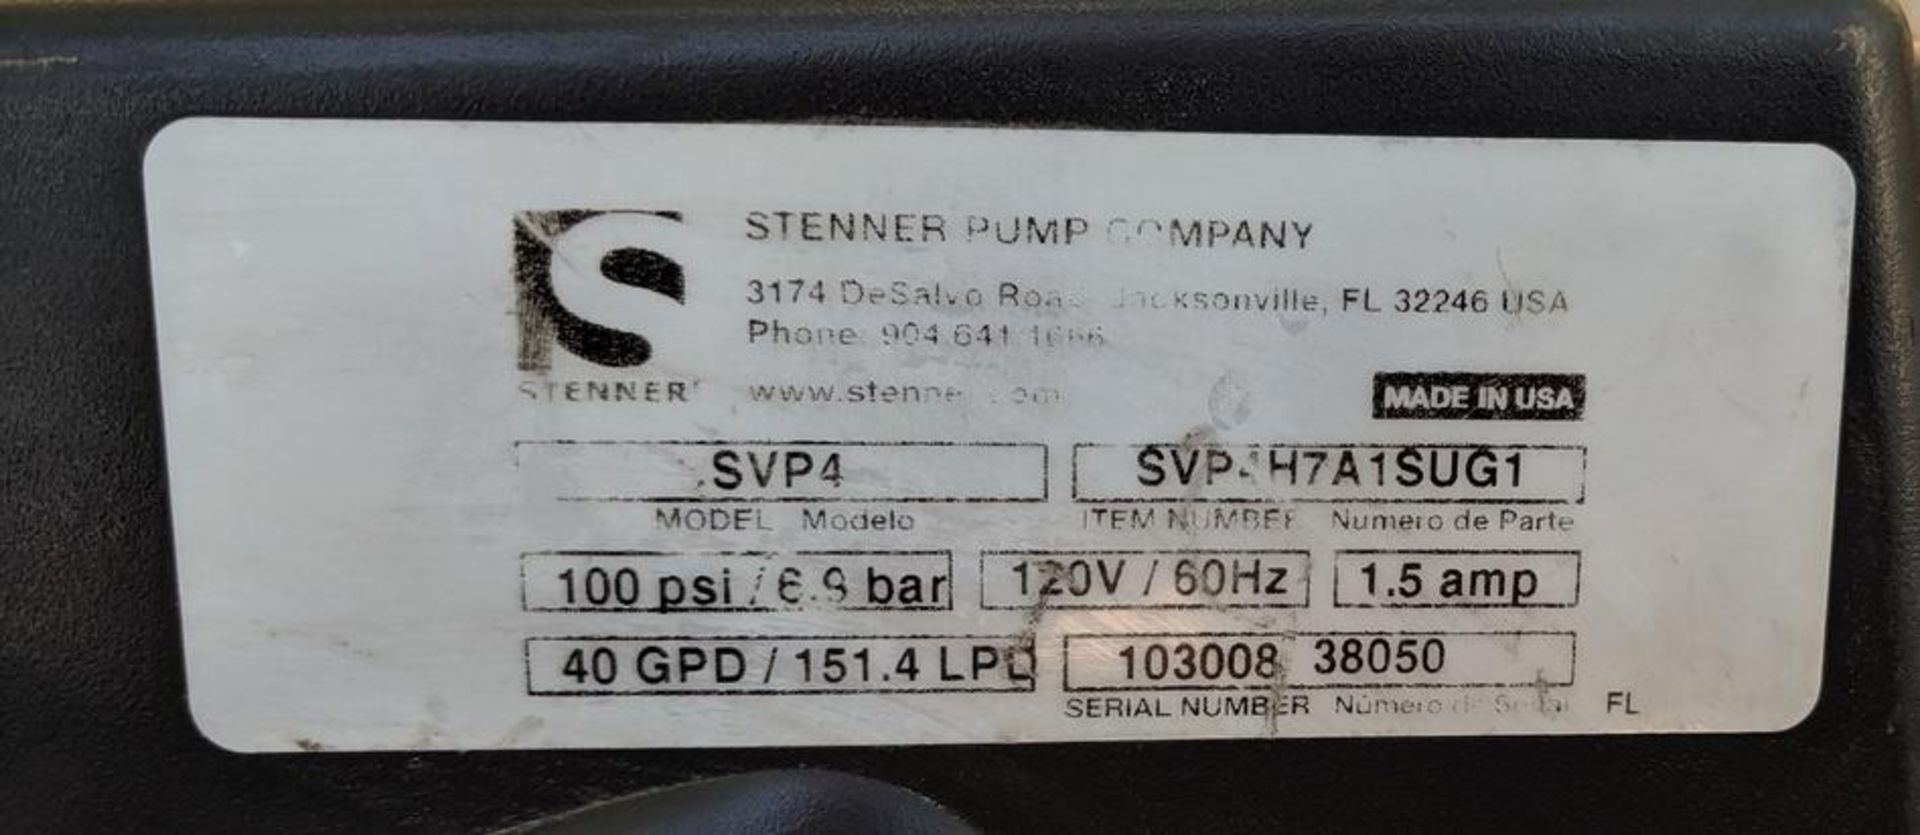 Stenner pump SVP4 series variable speed pump, 40 GPD, 100 psi, 120 v, 60 hz, 1.5 a - Image 2 of 9